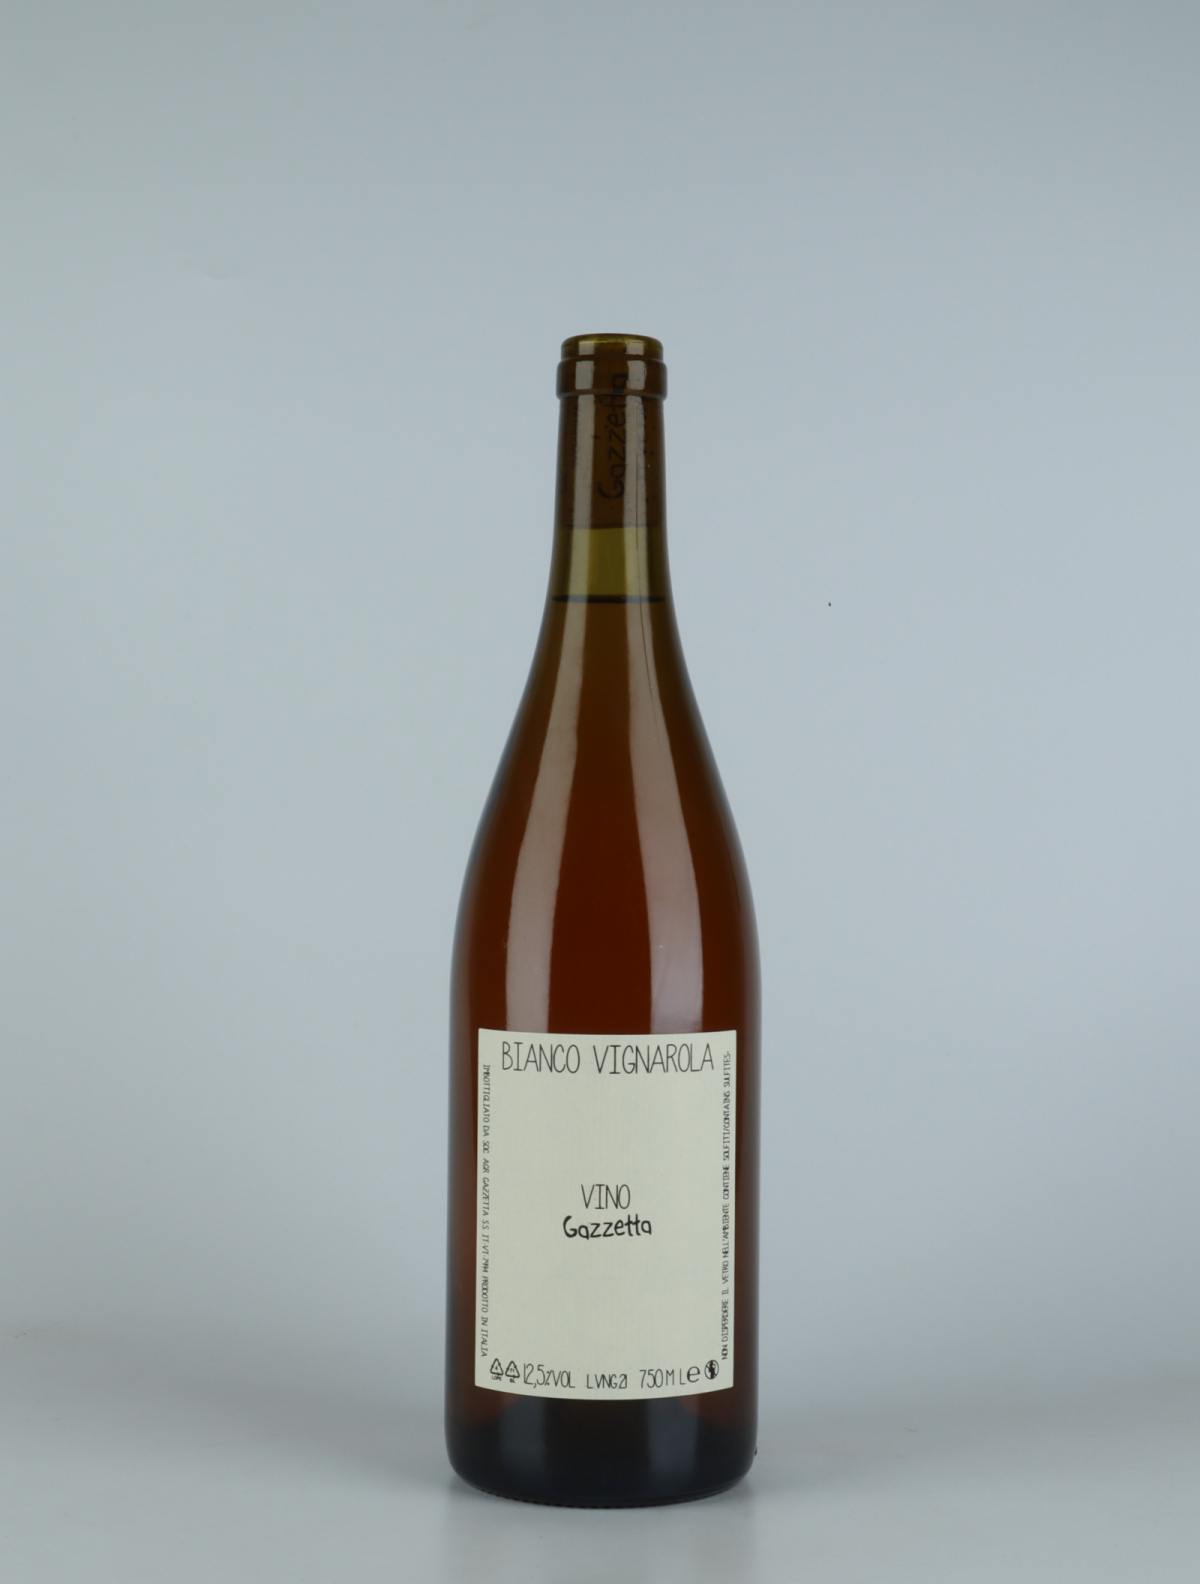 En flaske 2021 Vino Bianco Vignarola Orange vin fra Gazzetta, Lazio i Italien